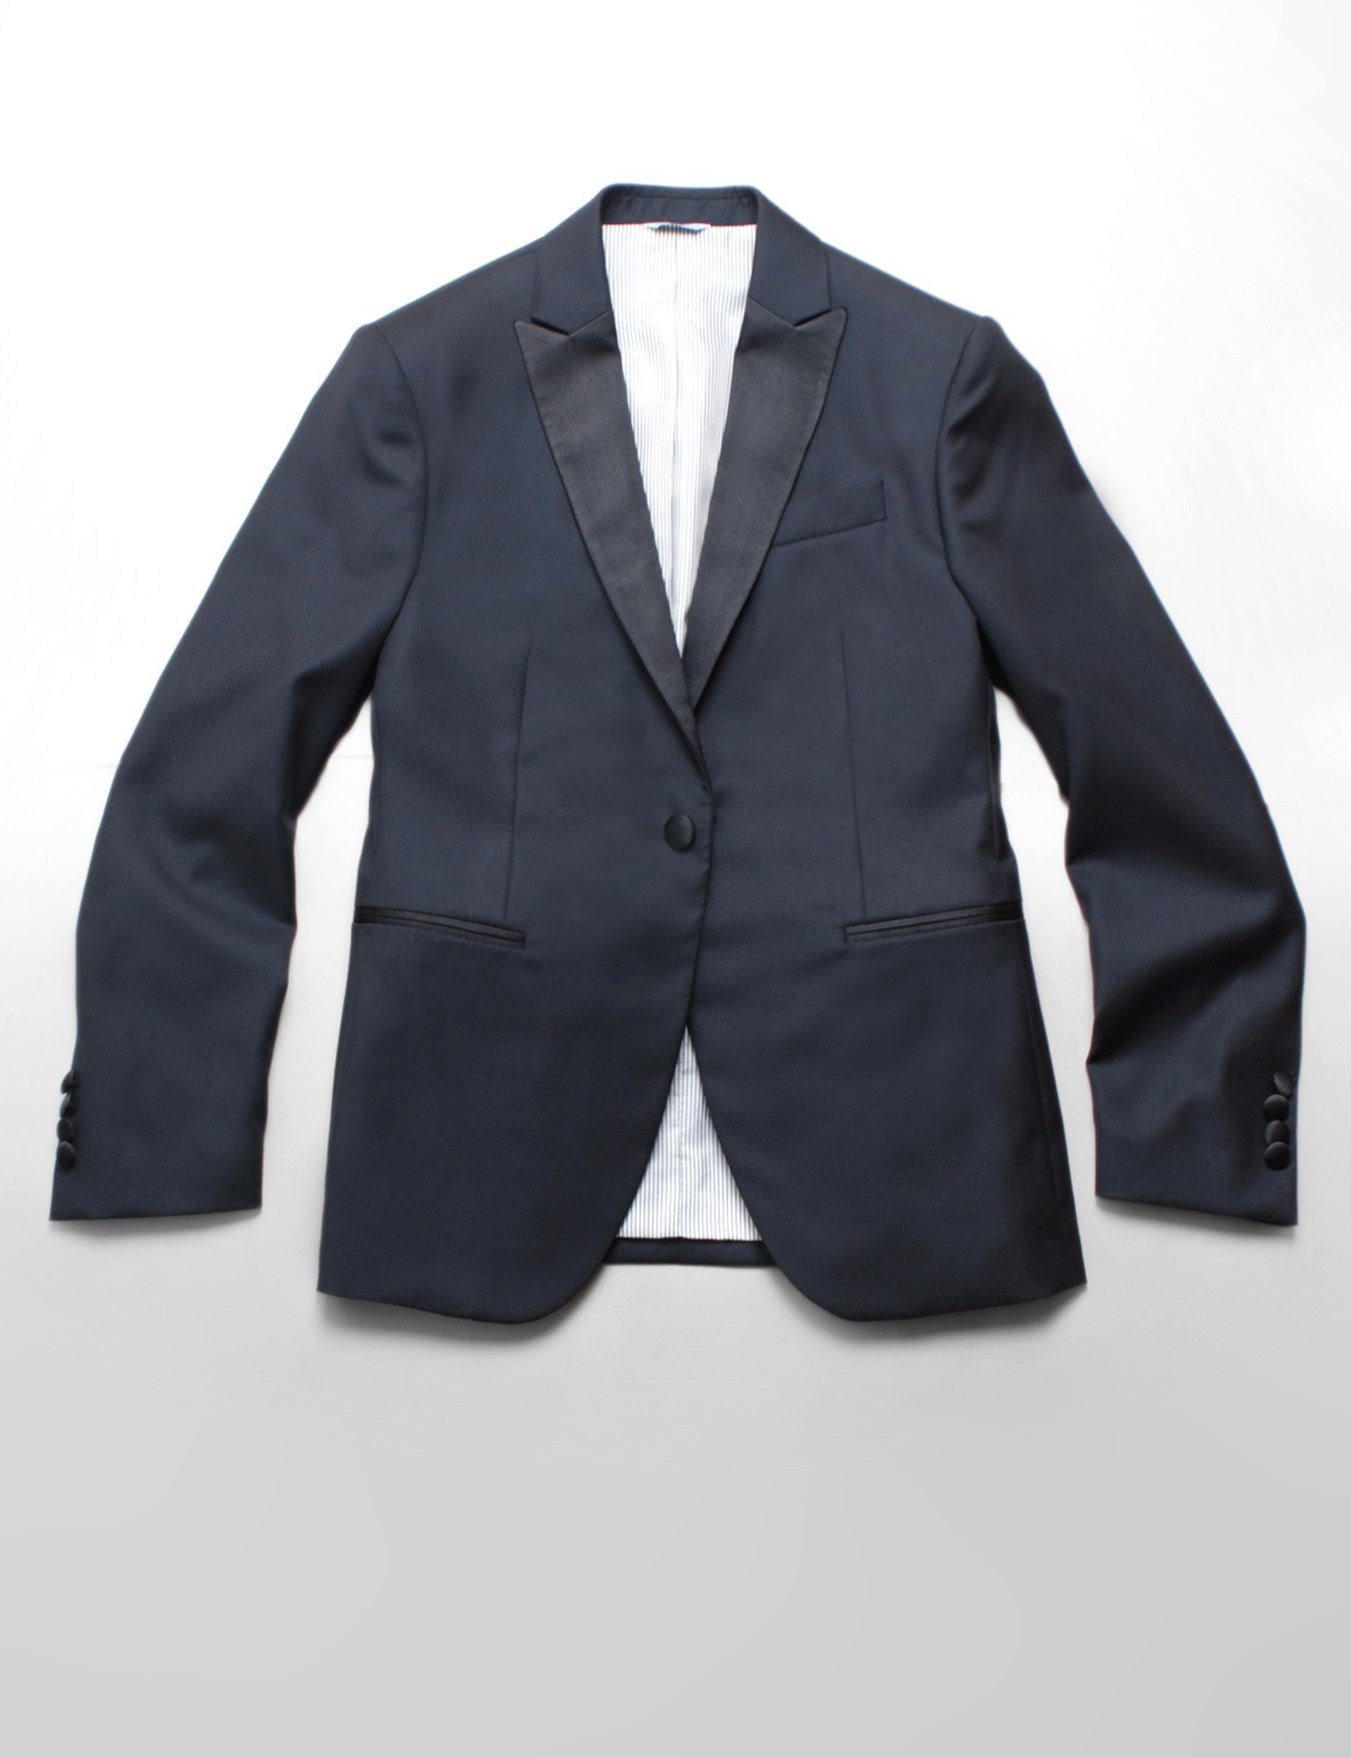 Brooklyn Tailors BKT50 Peak Lapel Tuxedo Jacket in Super 110s - Black with Satin Lapel full length flat shot